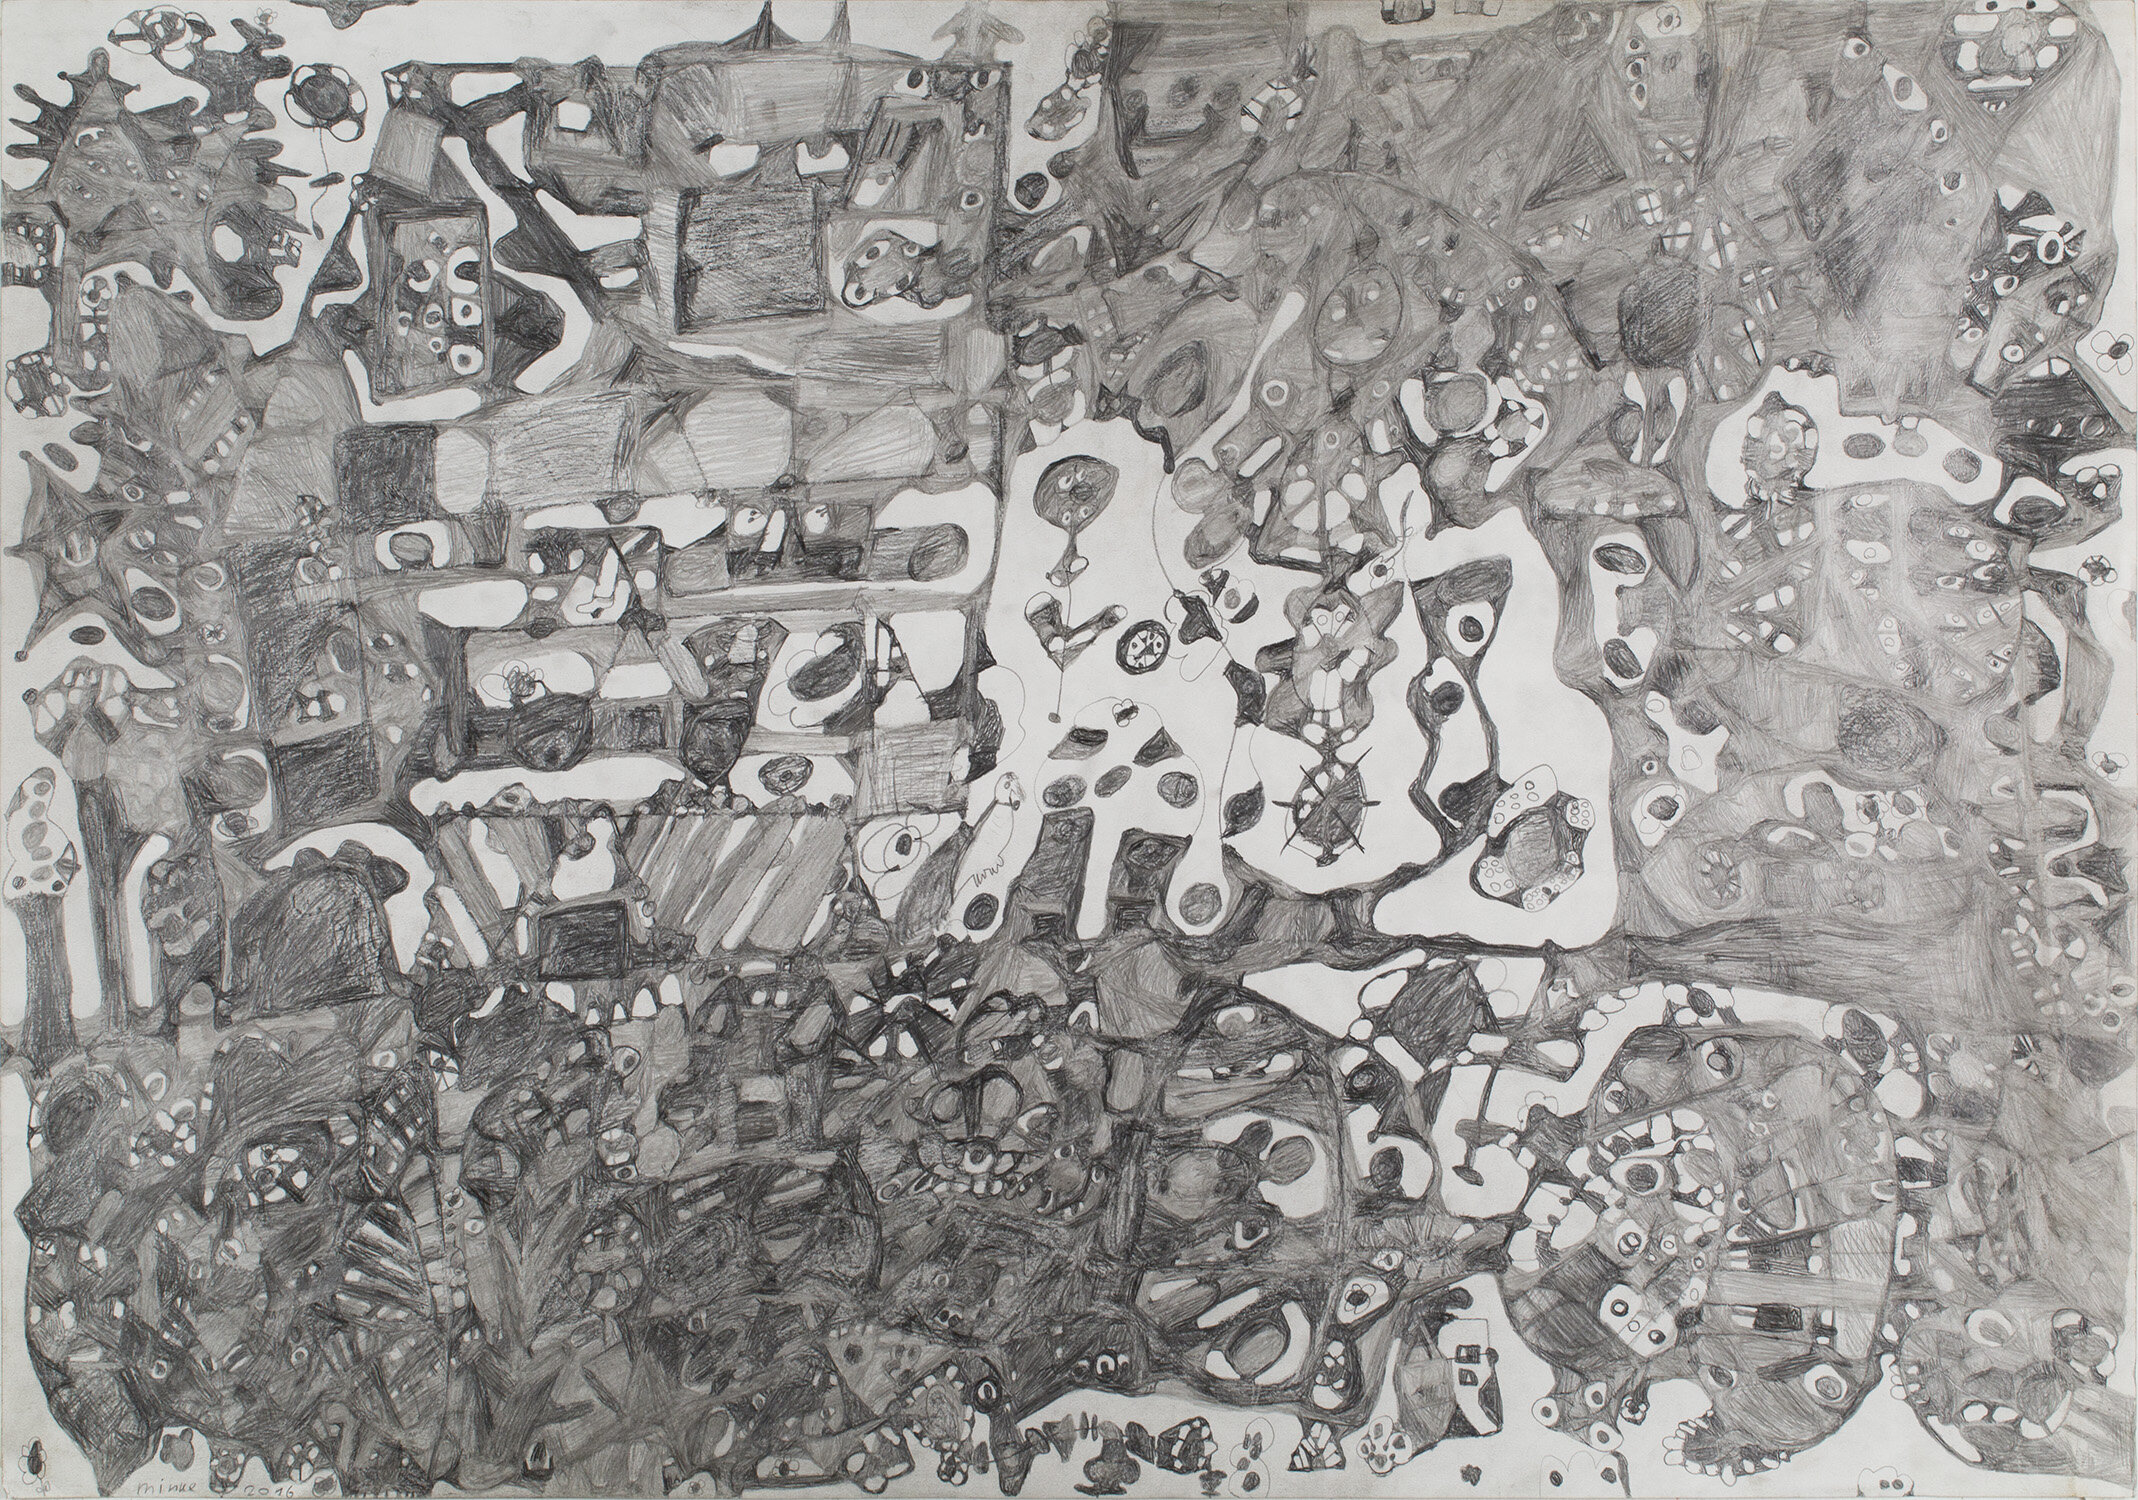   Minke de Fonkert     Verdwalde de Vissen  , 2016  Graphite on paper  27.5 x 39.25 inches  69.9 x 99.7 cm  MdF 2 